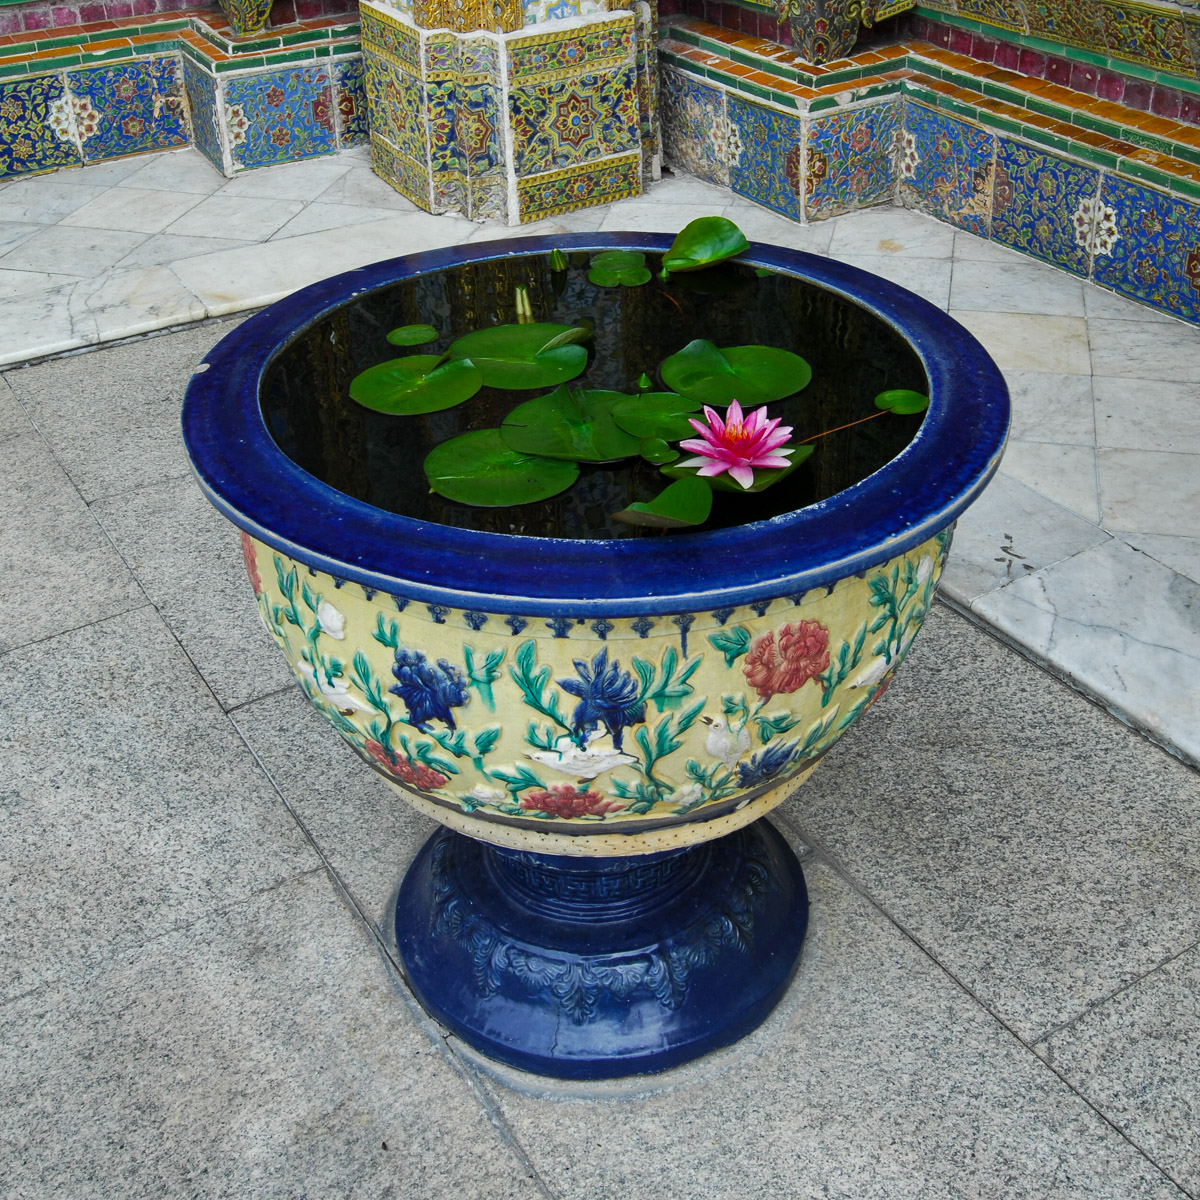 Water lily bowl, Wat Phra Kaeo